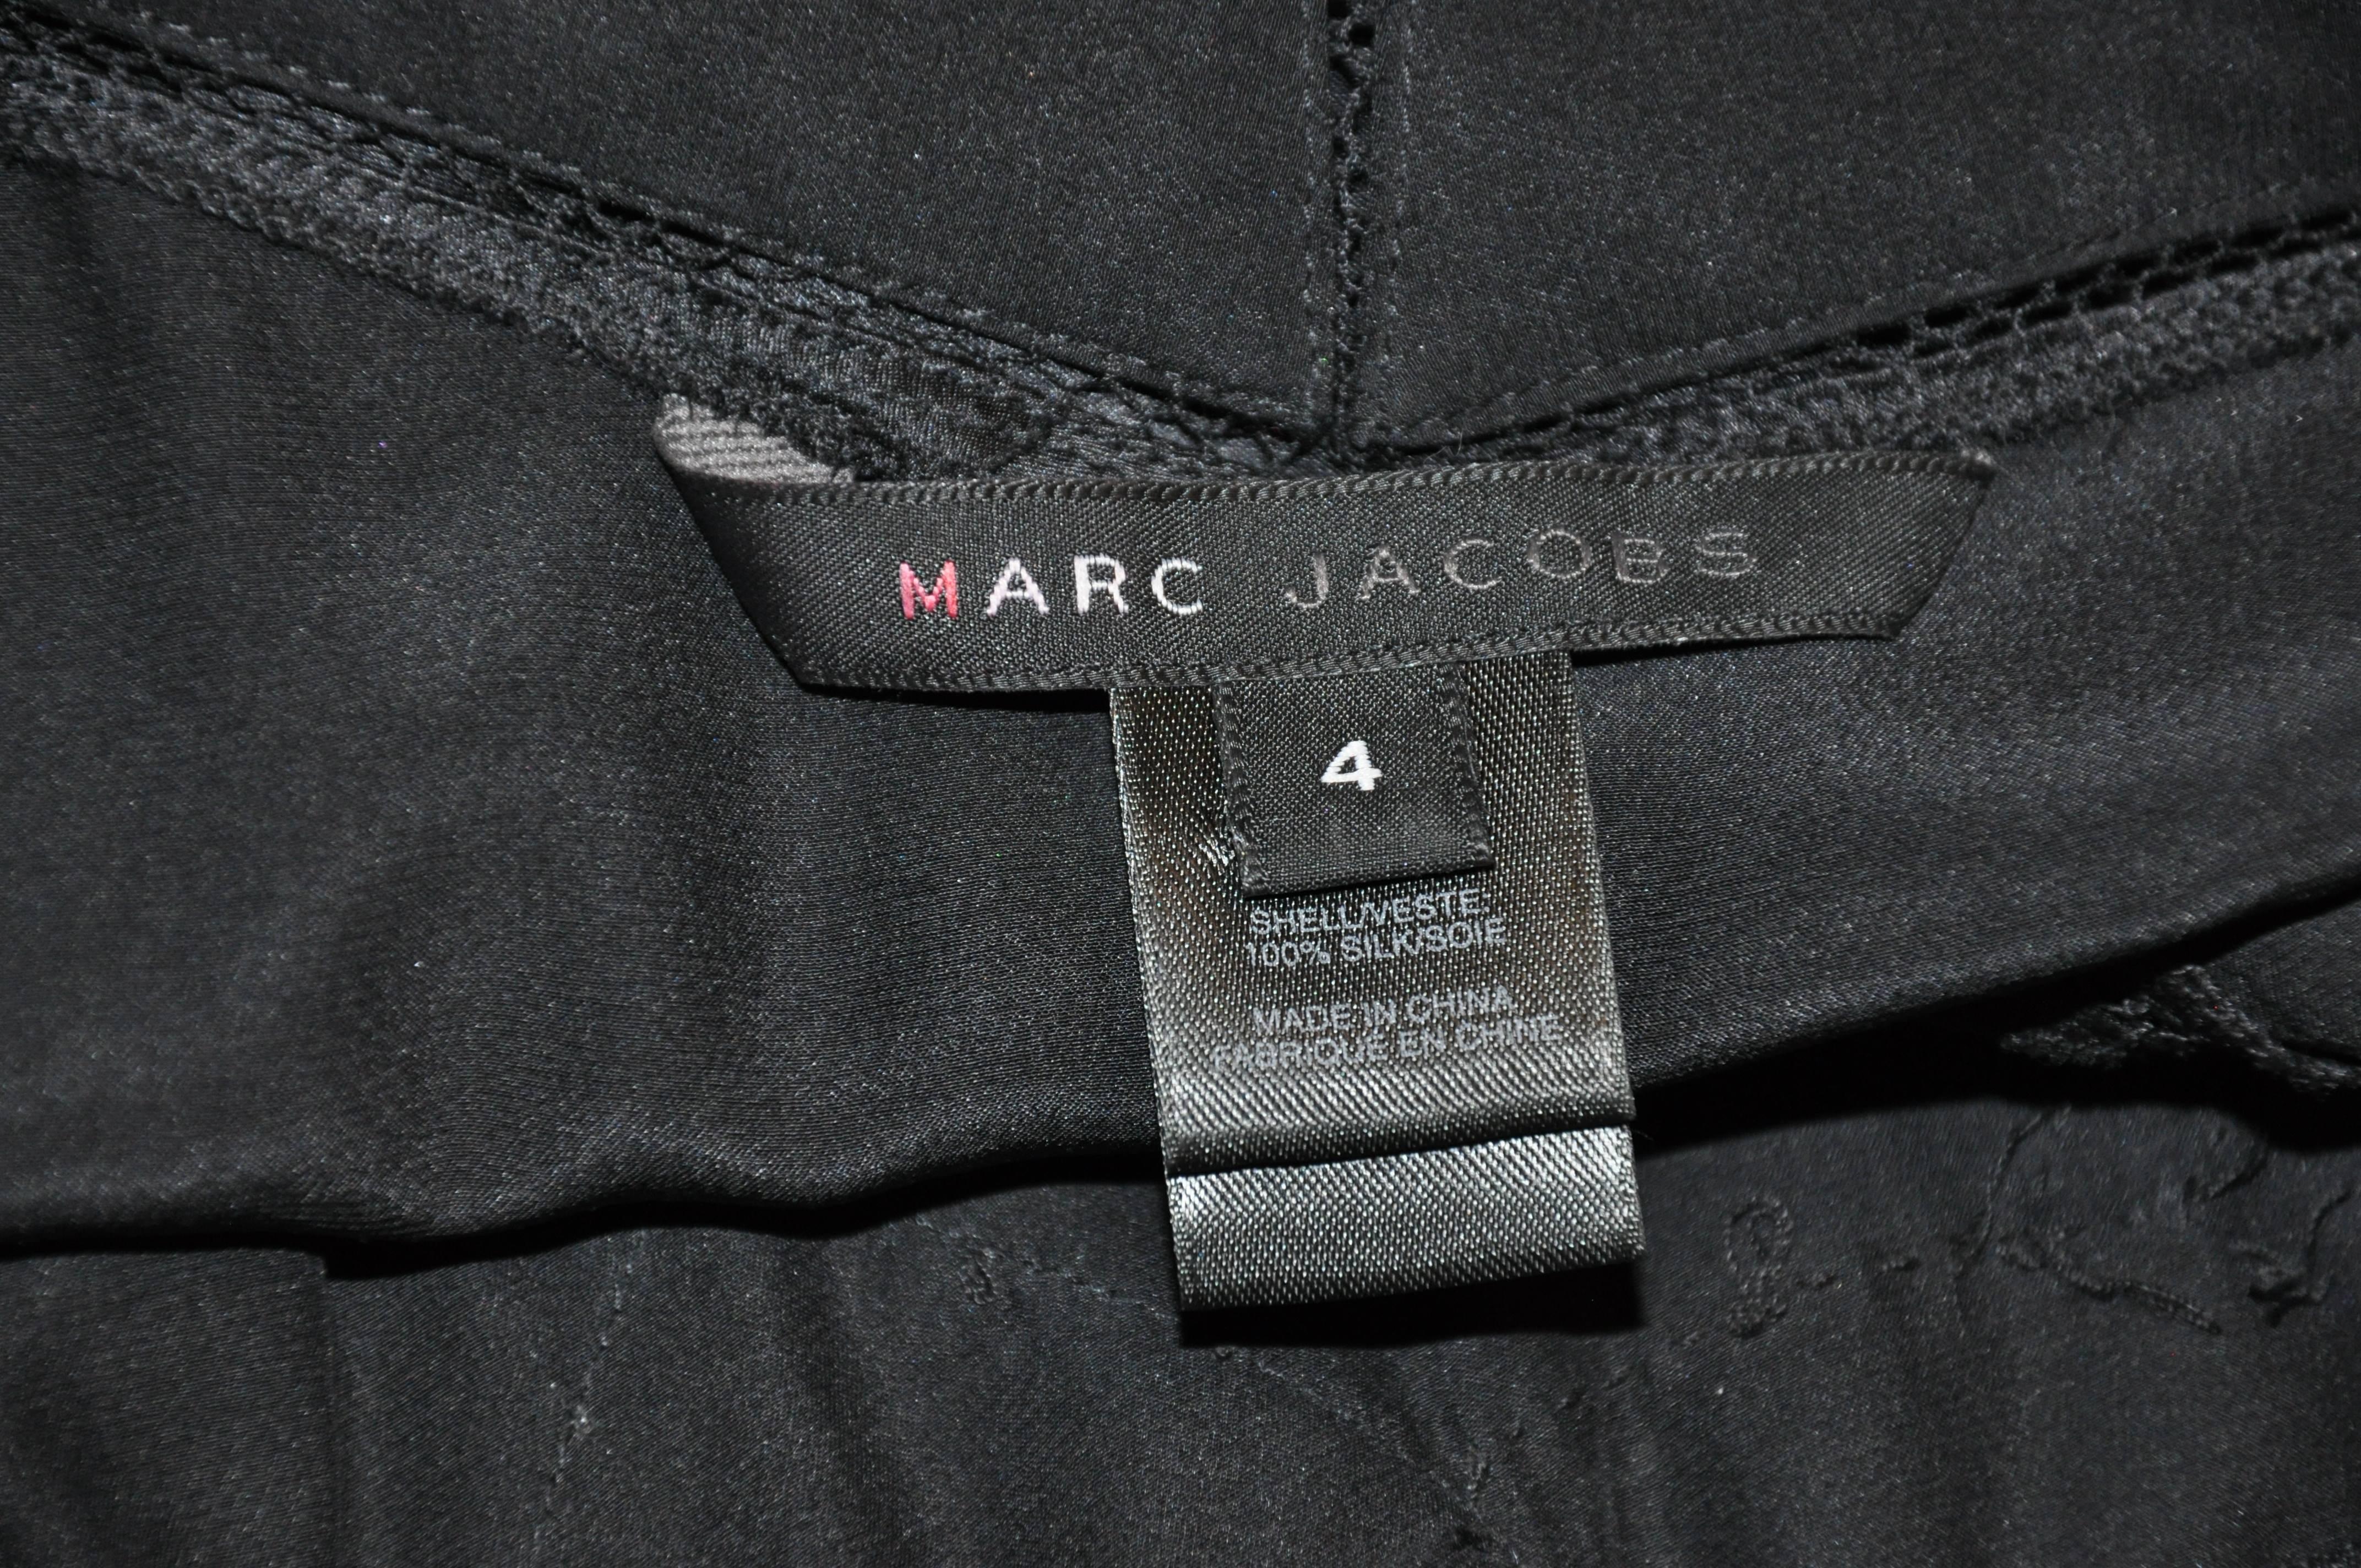 marc jacobs slip dress